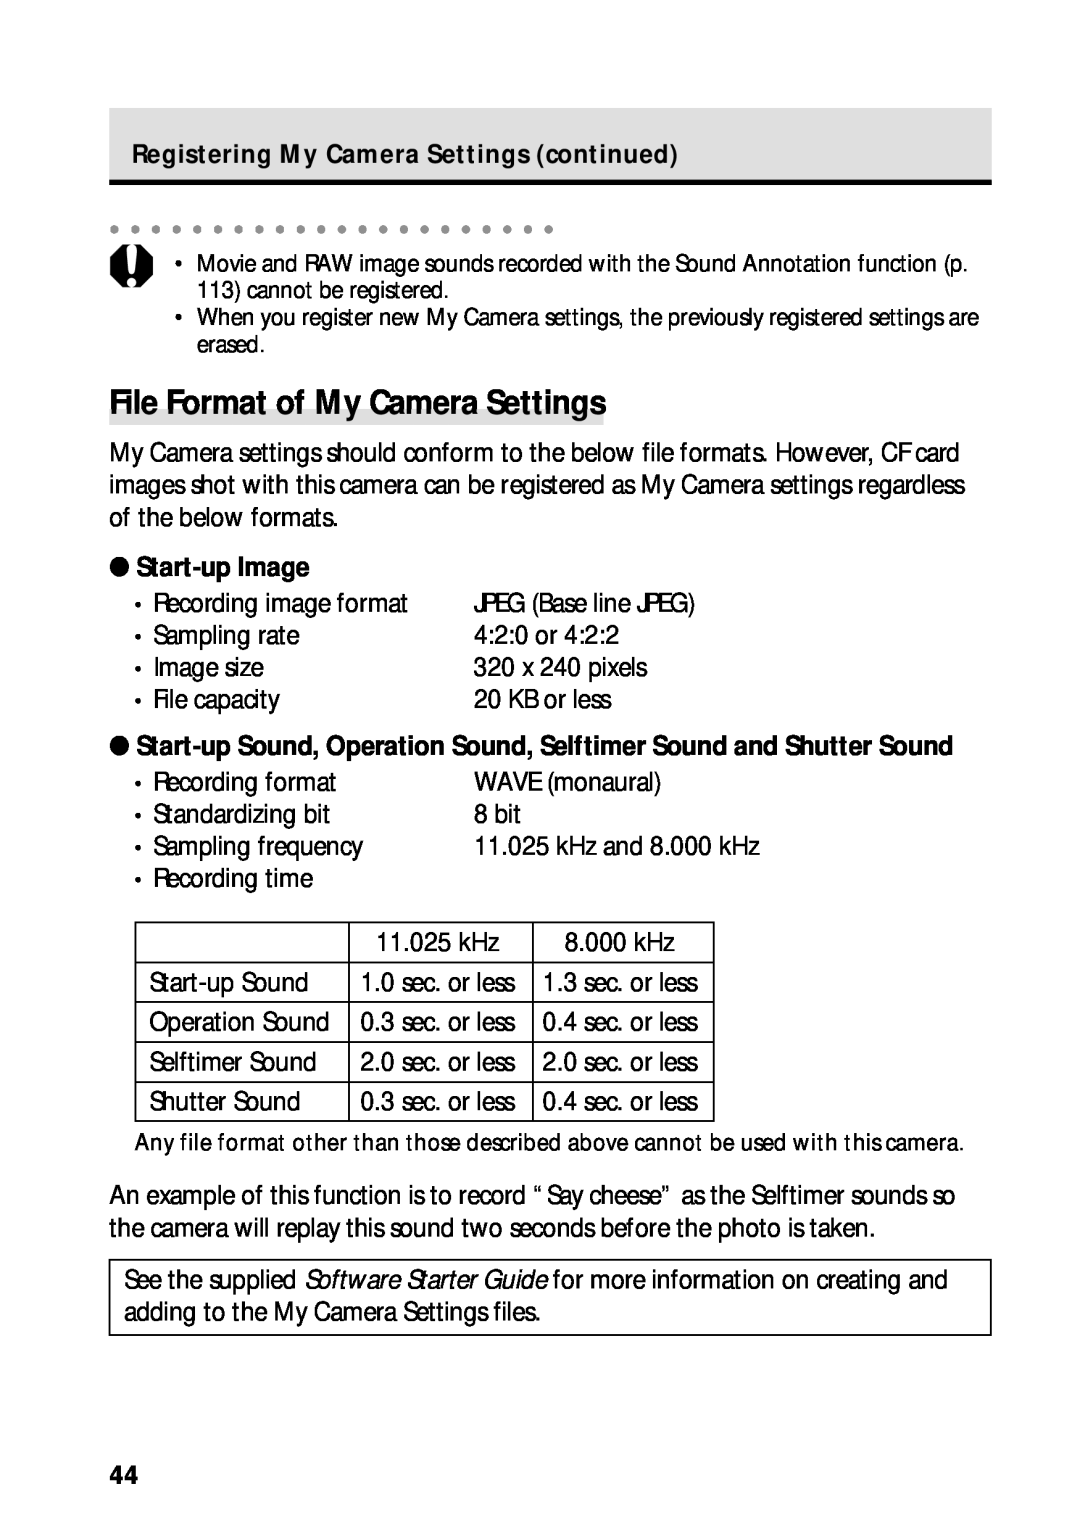 Canon PowerShot S45 manual File Format of My Camera Settings, Start-up Image 